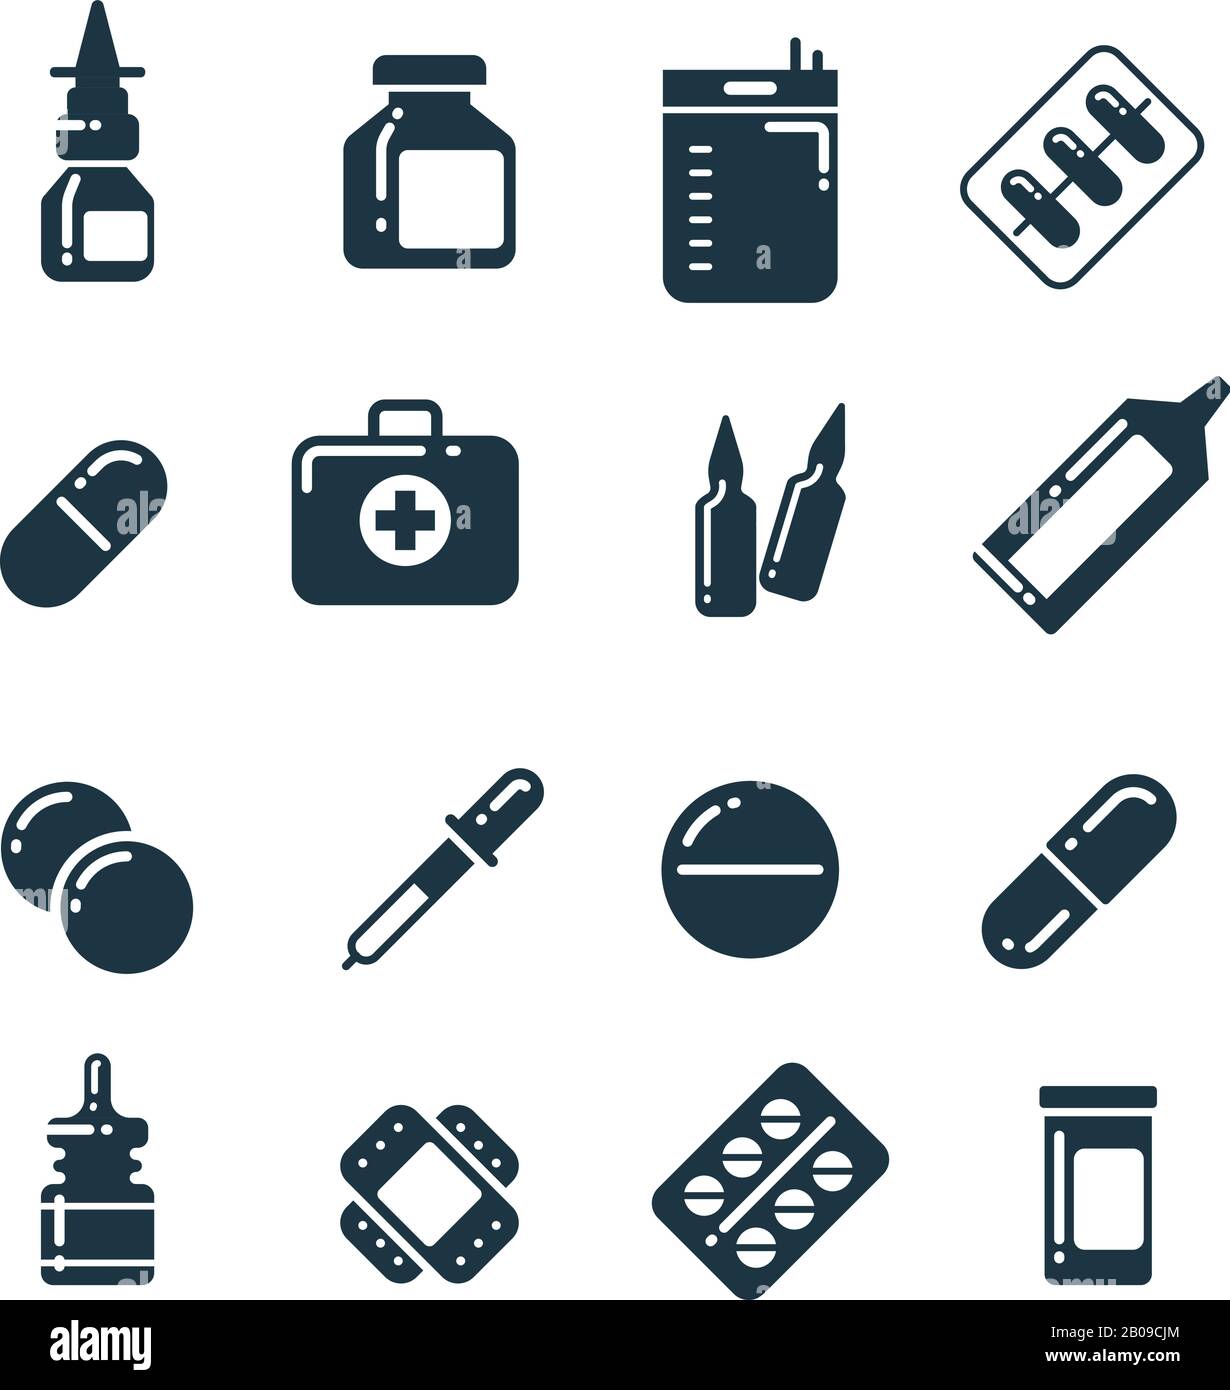 Medikationspharmakologie Pillen, Tabletten, Medizinflaschen Vektorsymbole. Medizinische Medikamente Flasche und Kapsel, Abbildung des Medikaments der Apotheke Stock Vektor